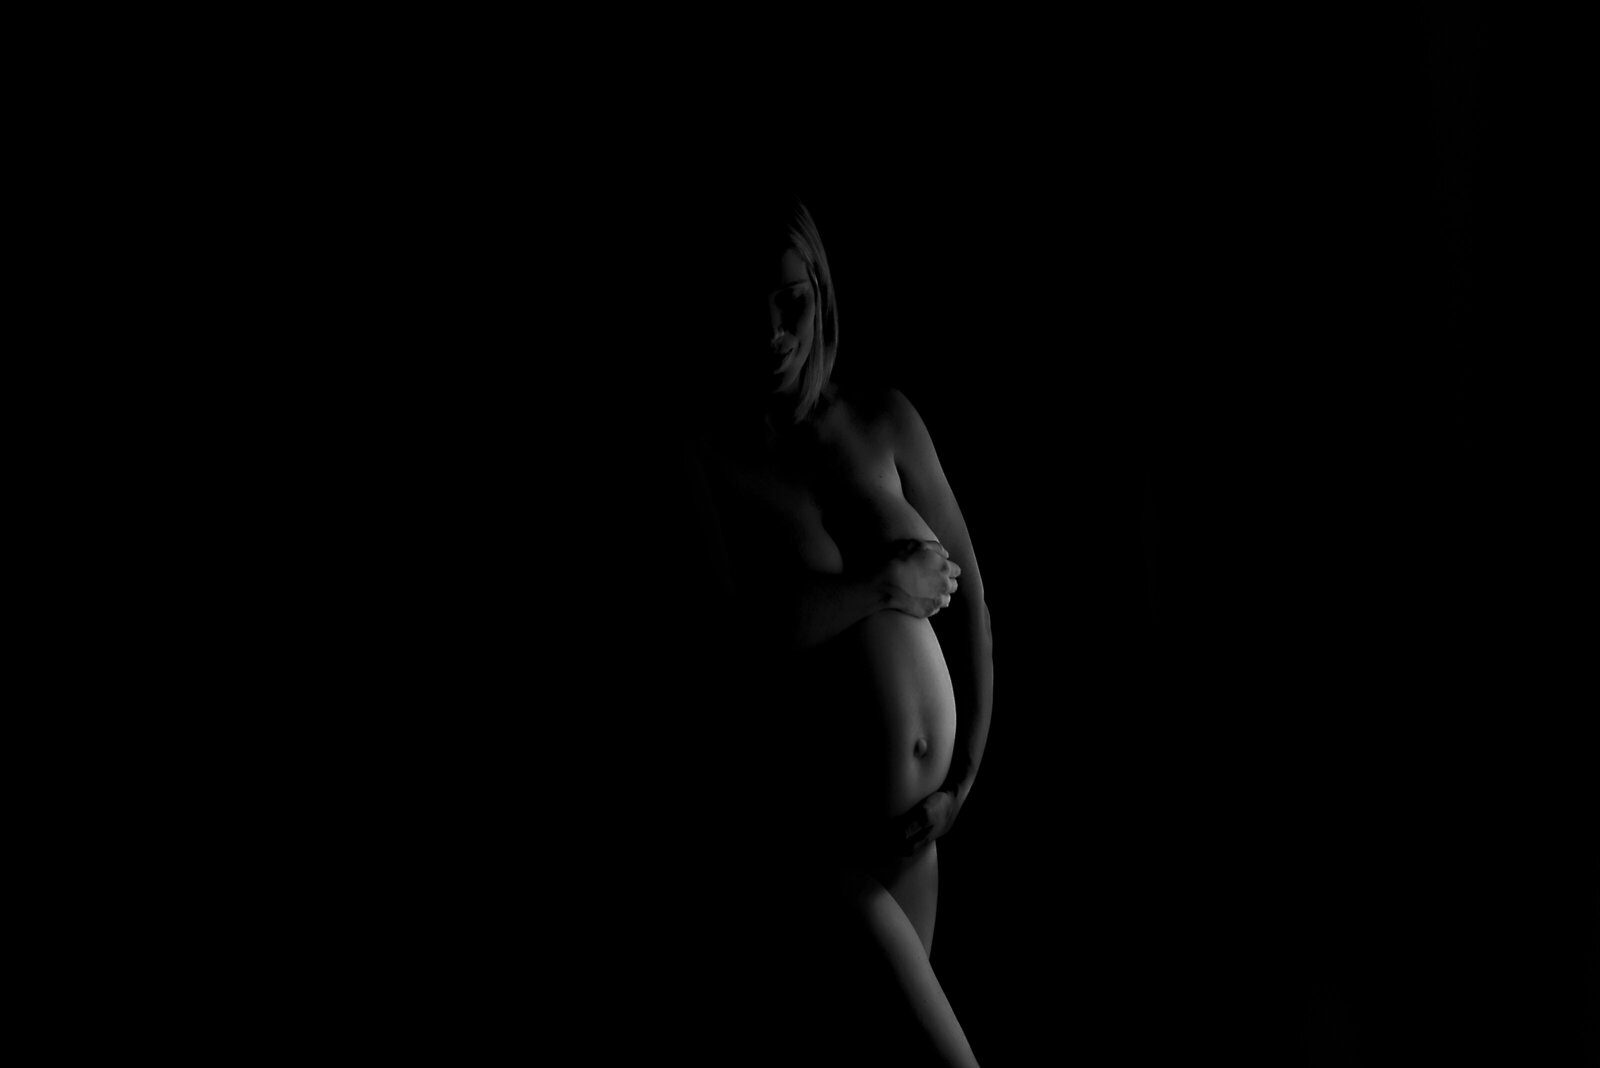 dallas tx maternity photographer, maternity photography near me, professional maternity photos, pregnancy photoshoot DFW